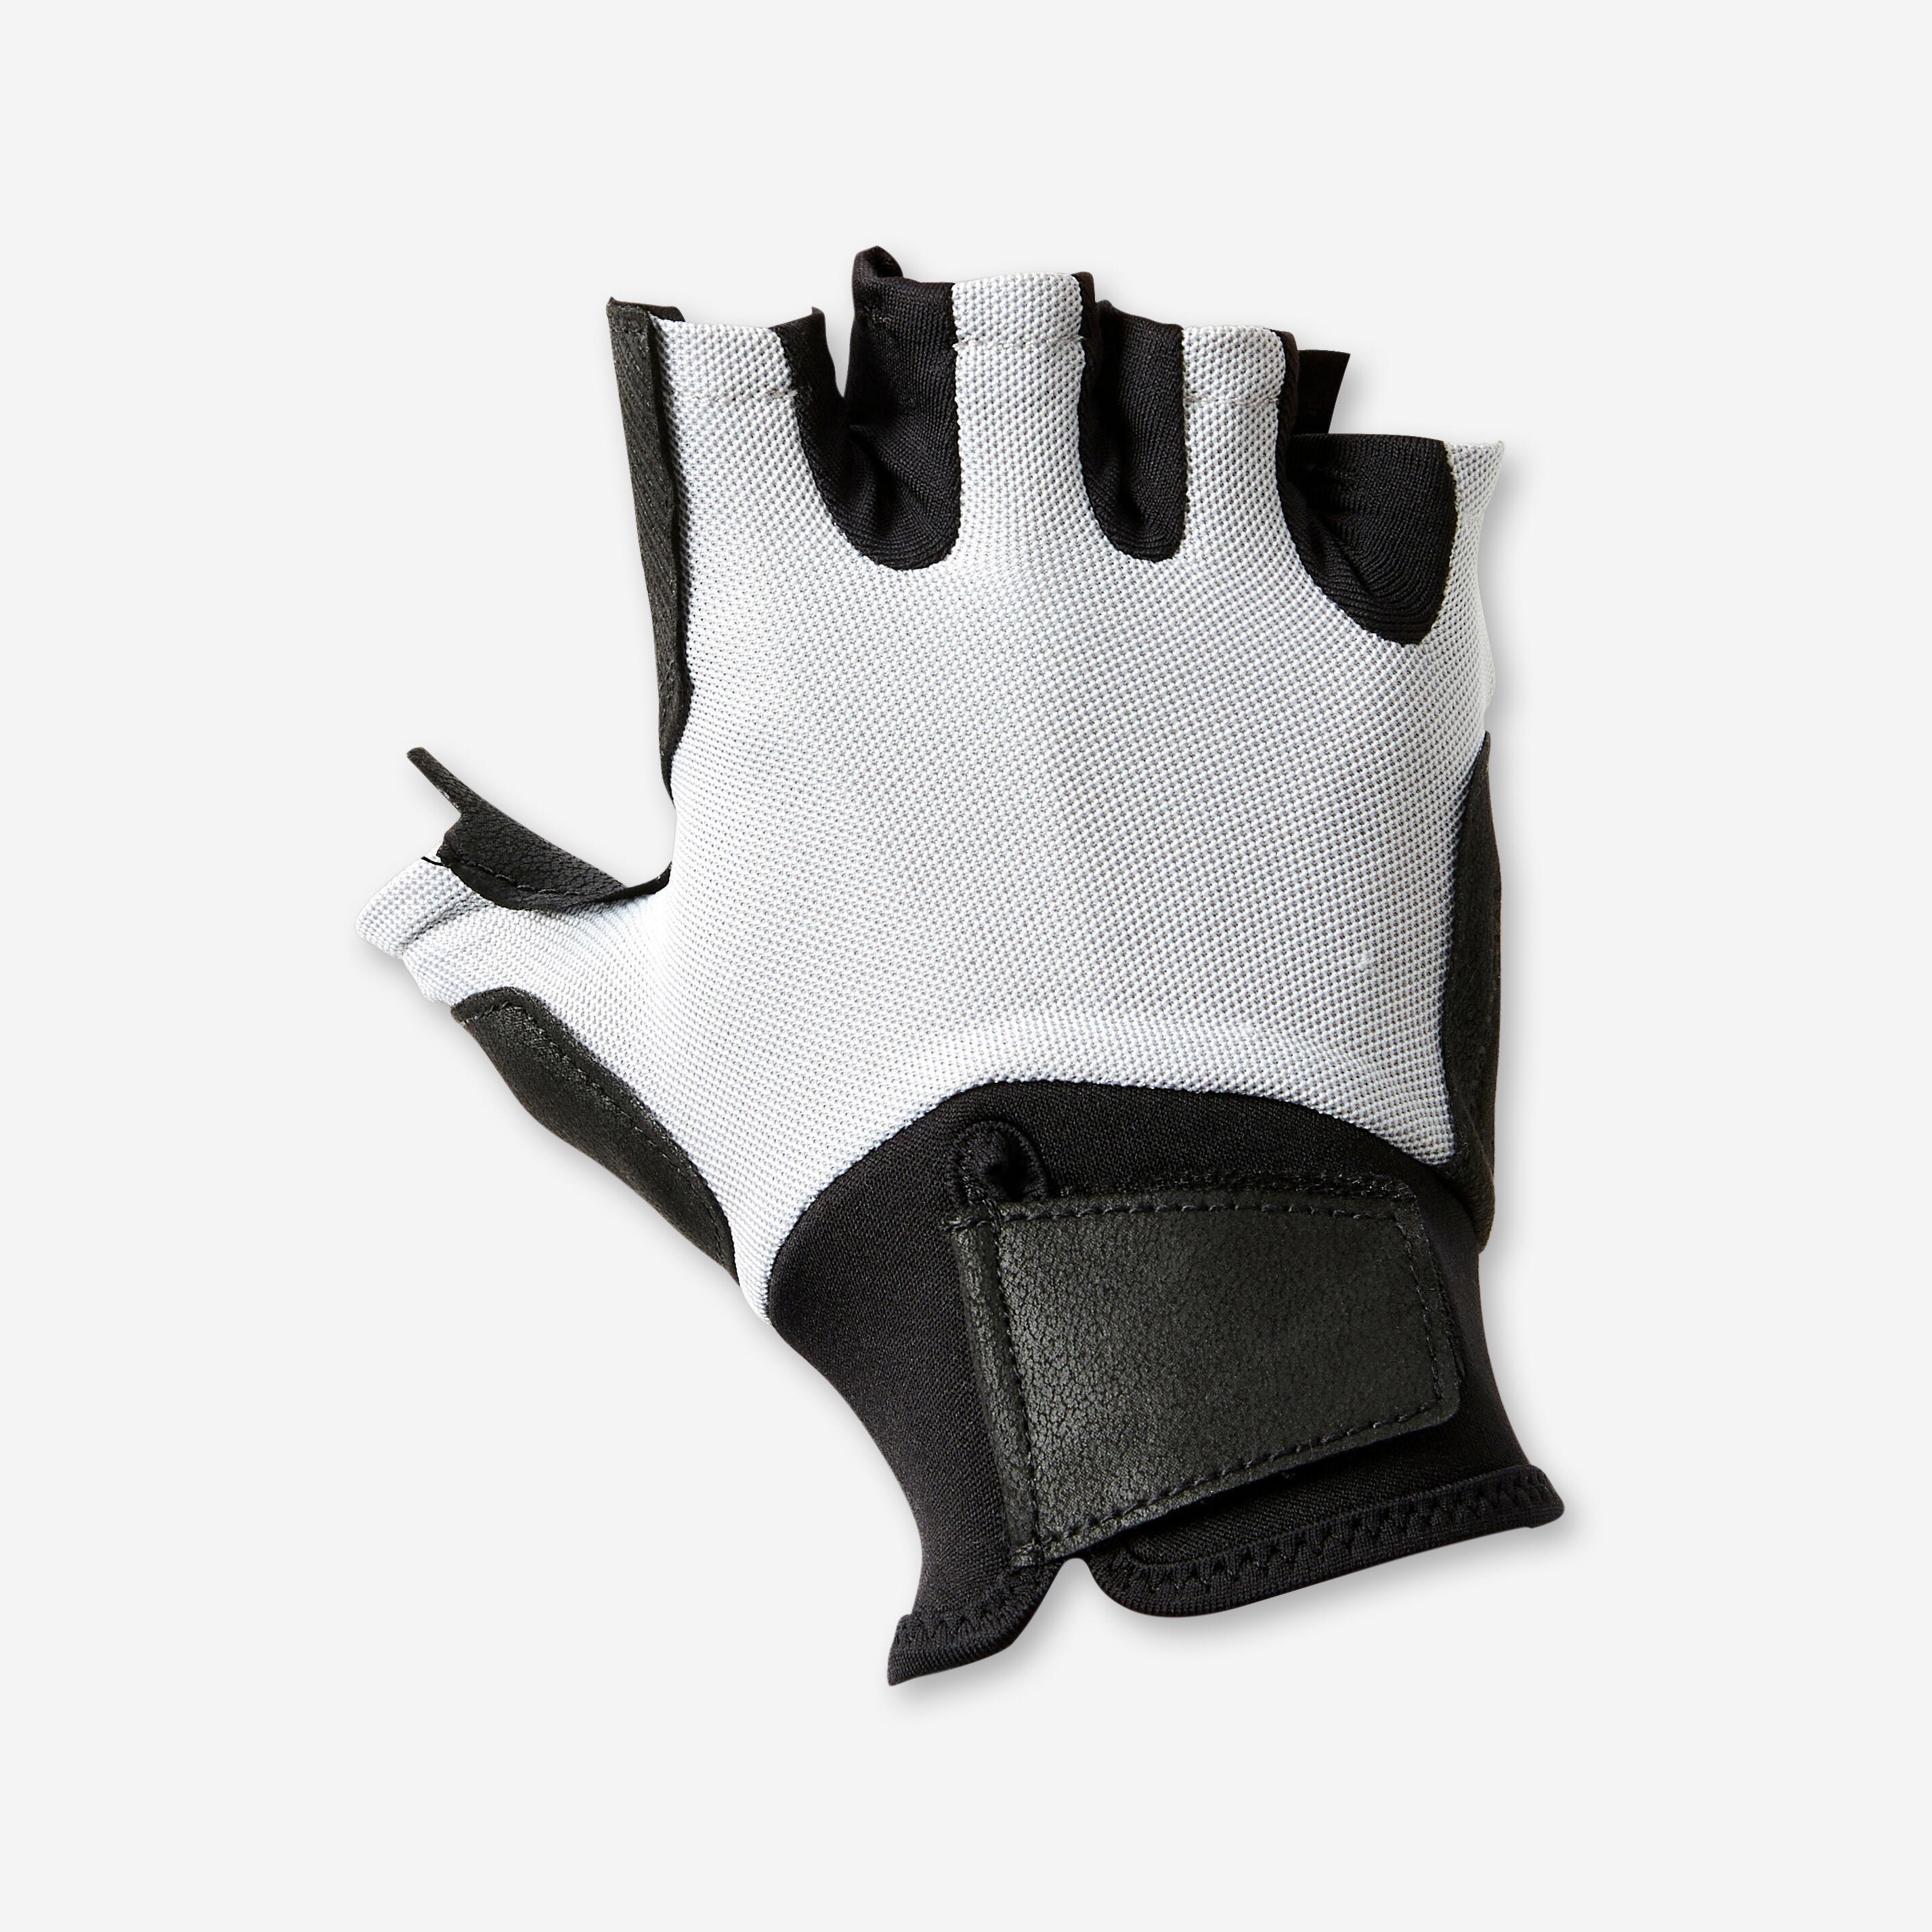 gants musculation confort - gris - domyos